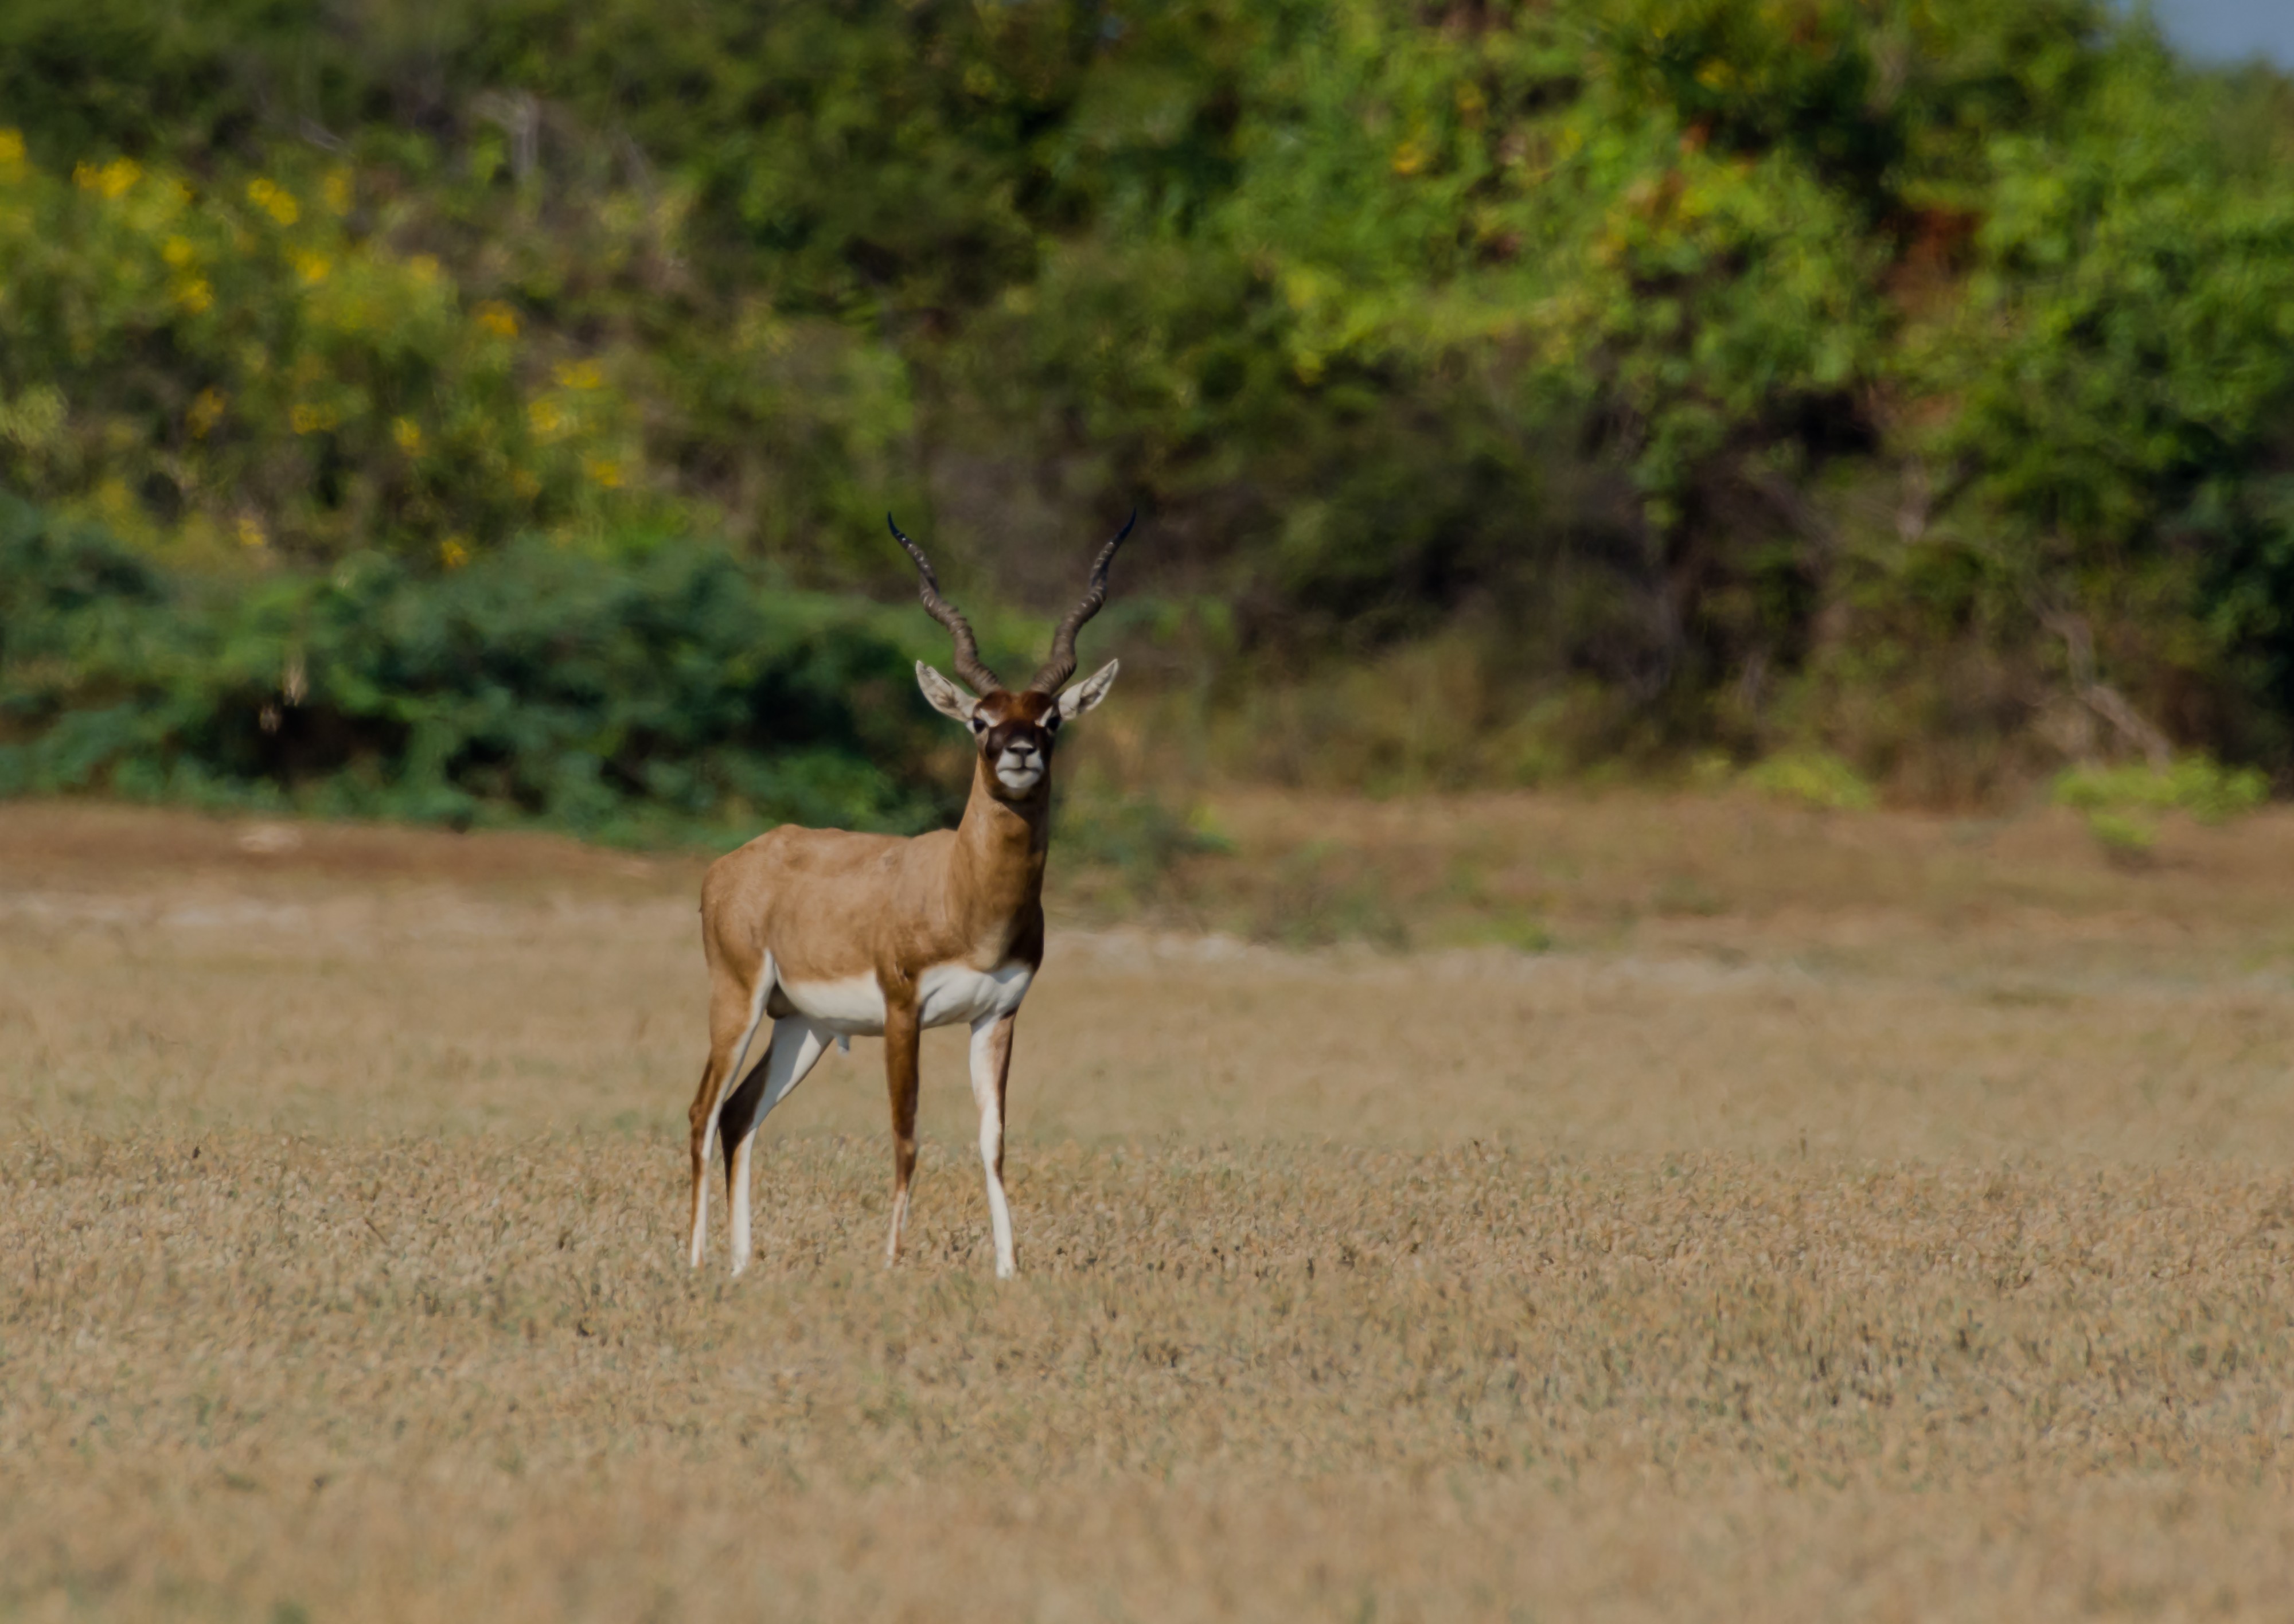 Blackbuck antelope